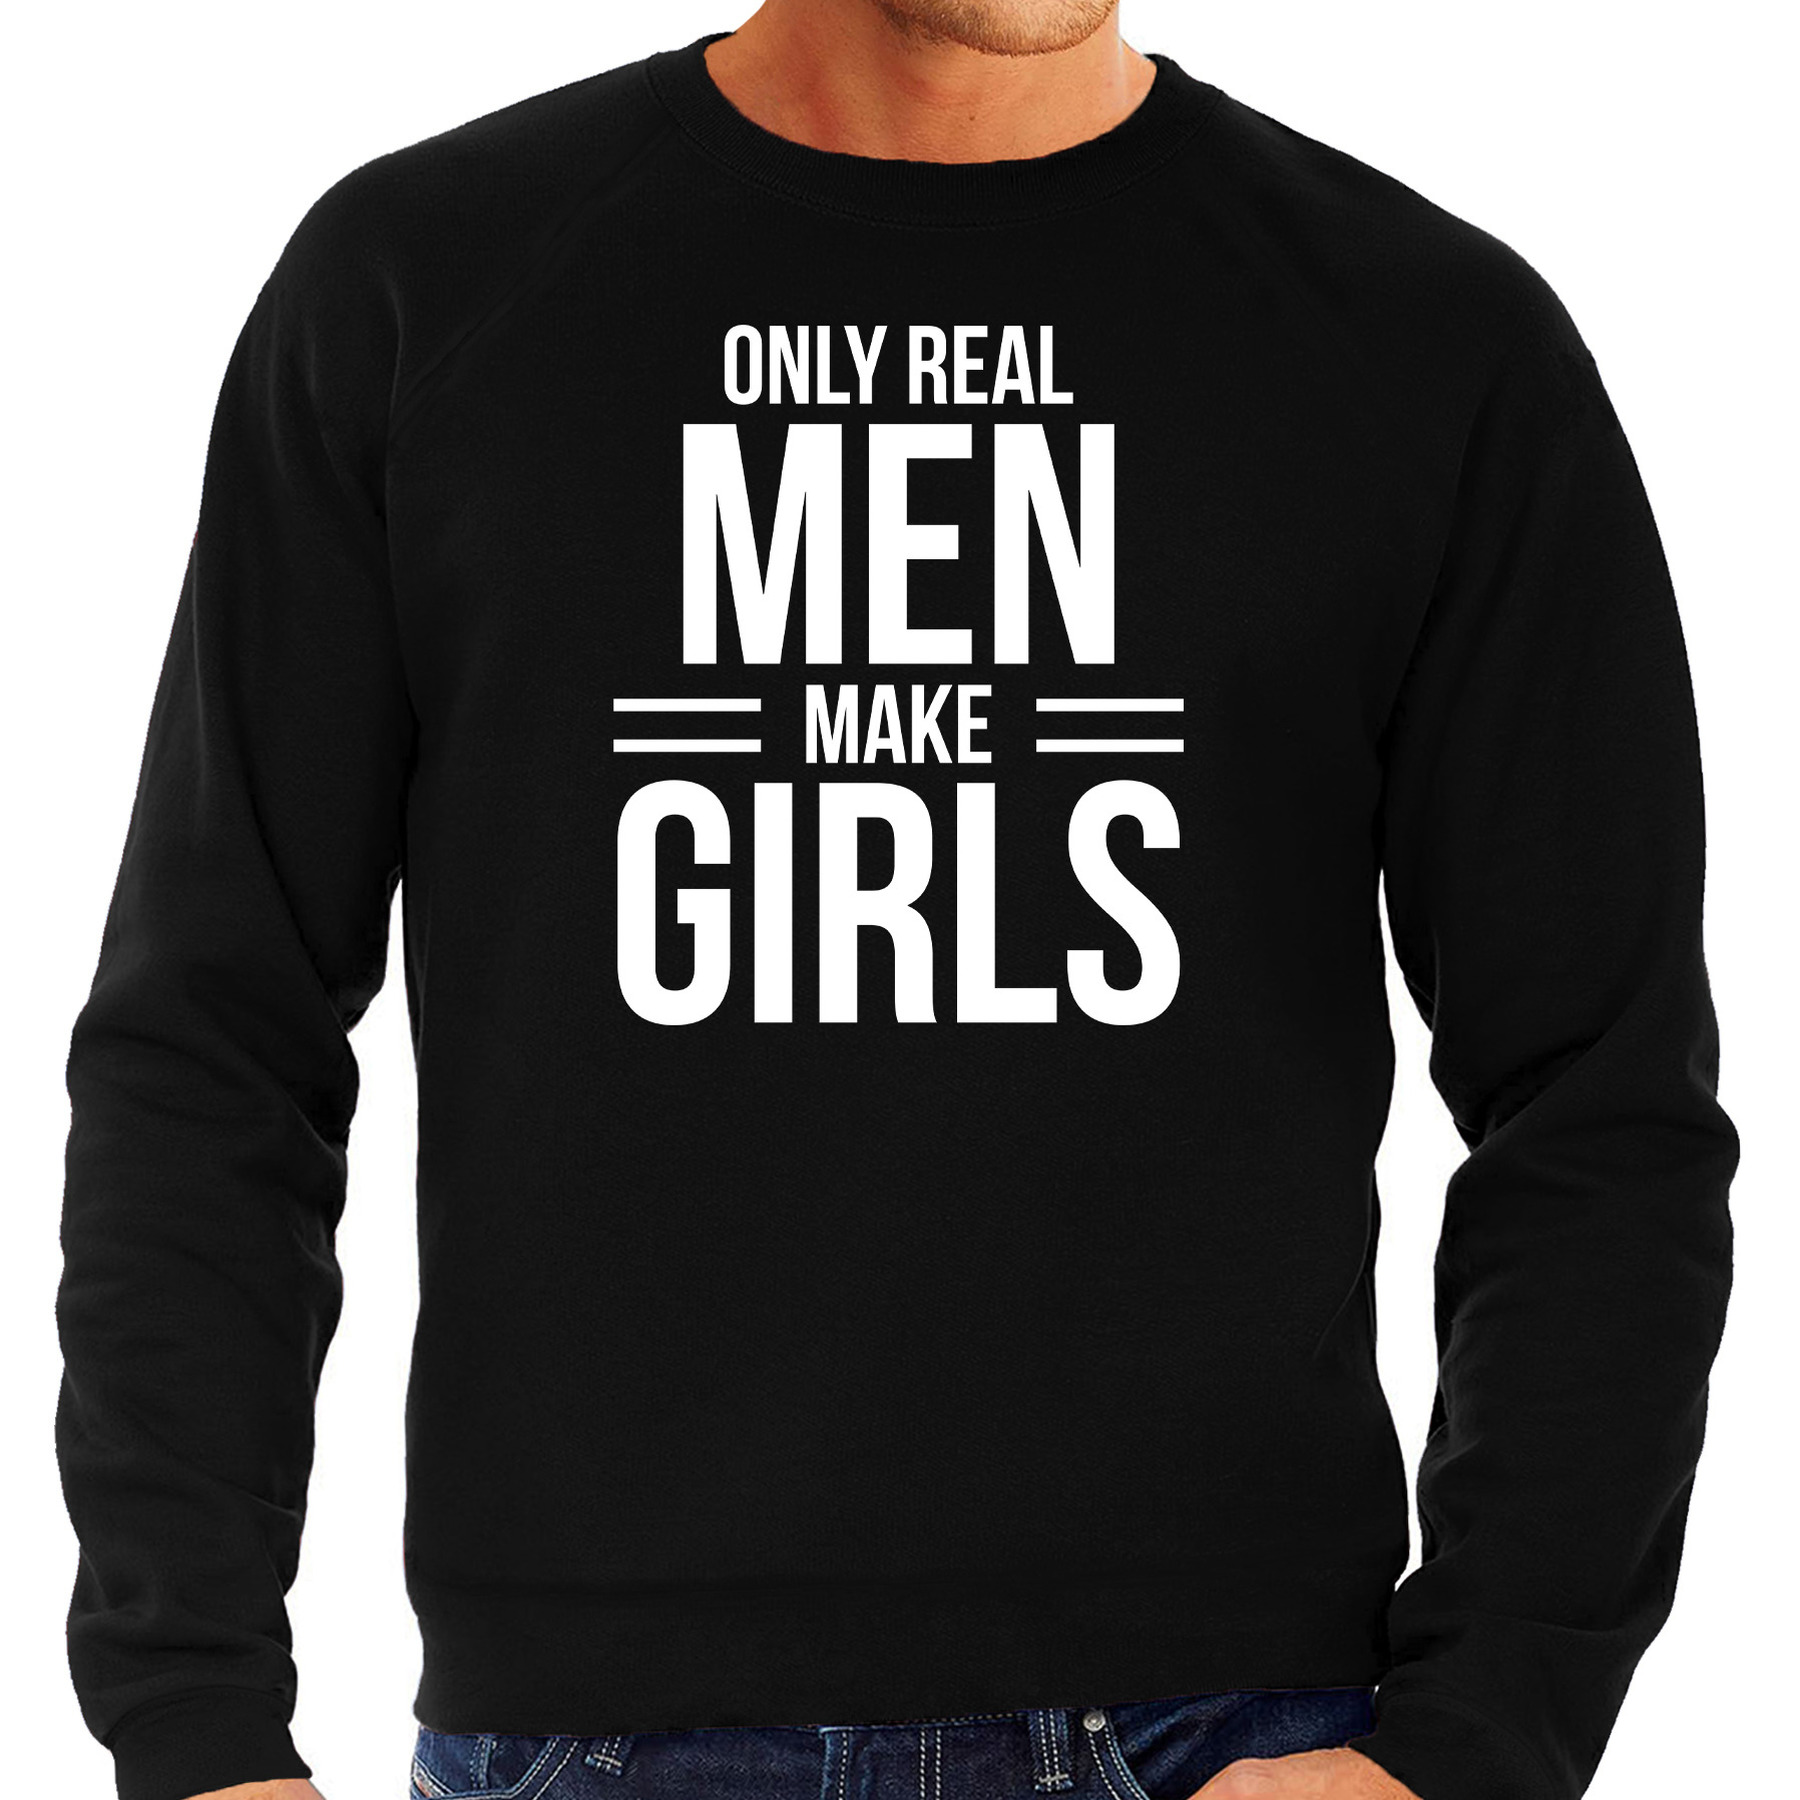 Only real men make girls sweater-trui zwart voor heren vaderdag cadeau truien papa